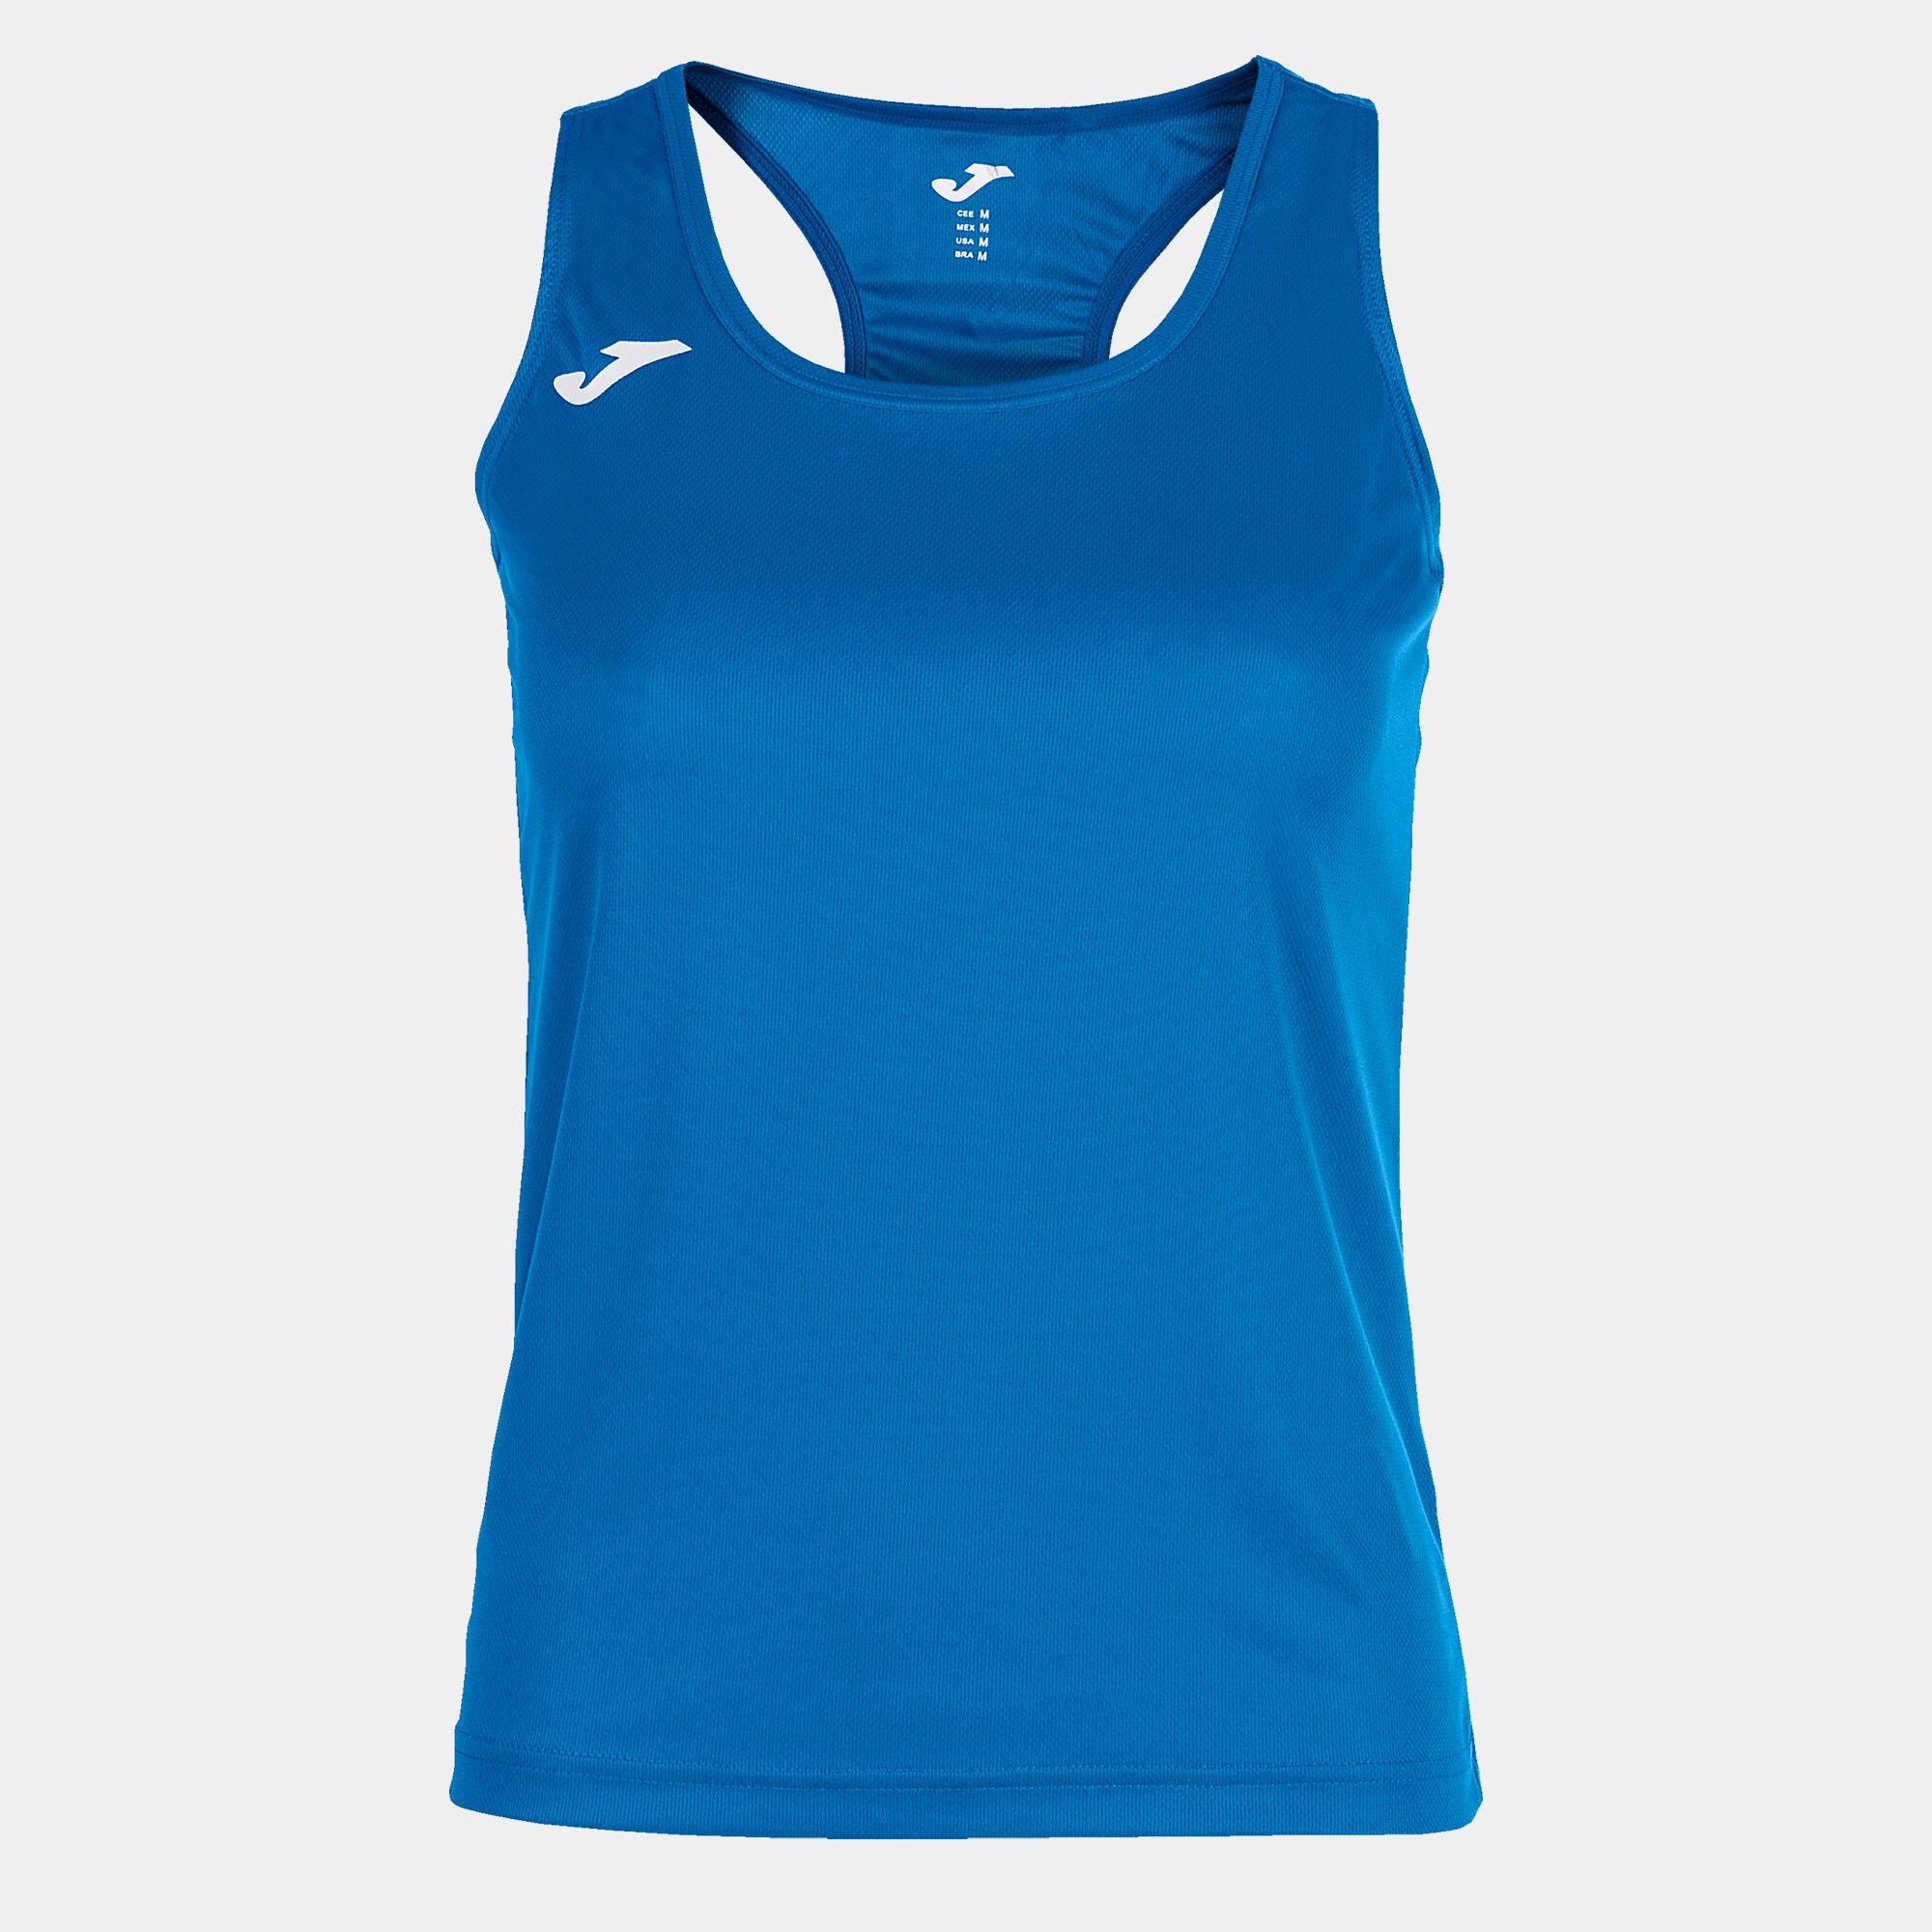 Schulterriemen-shirt frau Siena II königsblau